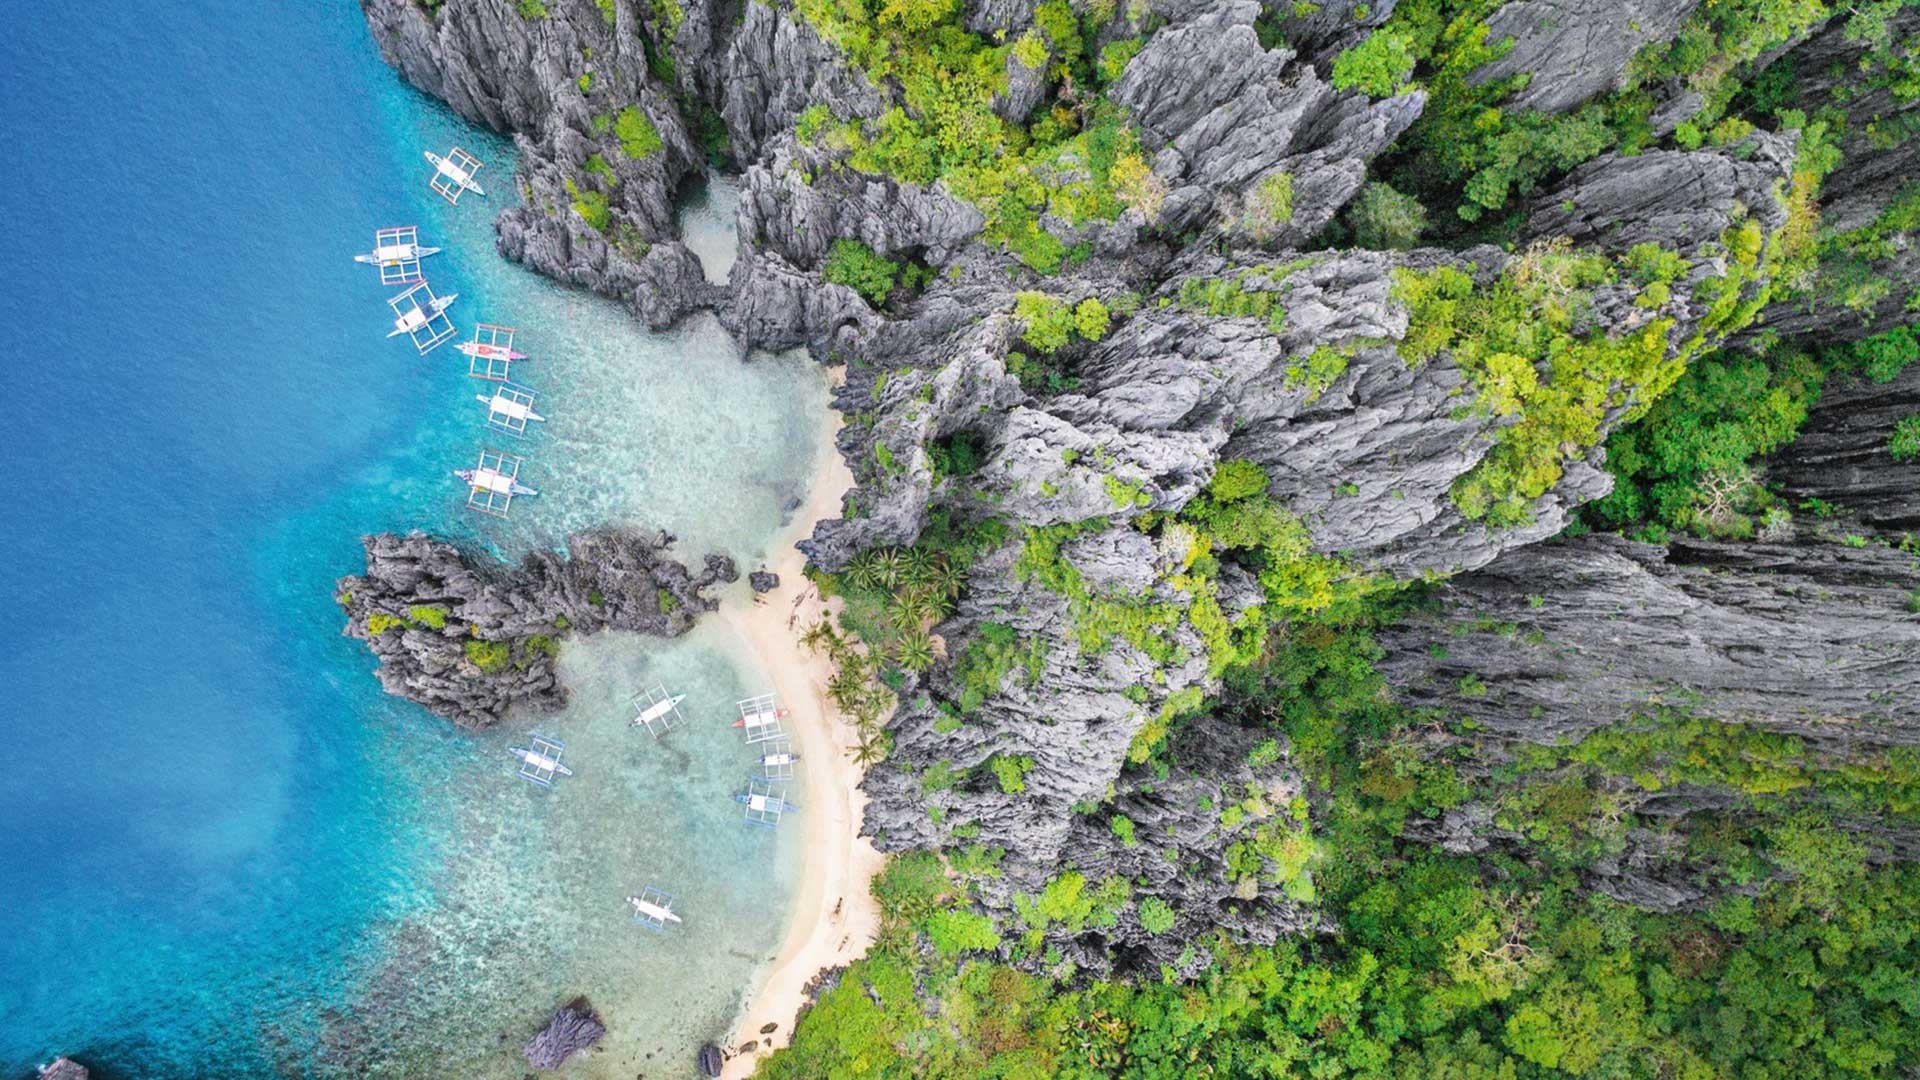 Palawan paradise, Tropical island, Crystal clear waters, Remote getaway, 1920x1080 Full HD Desktop